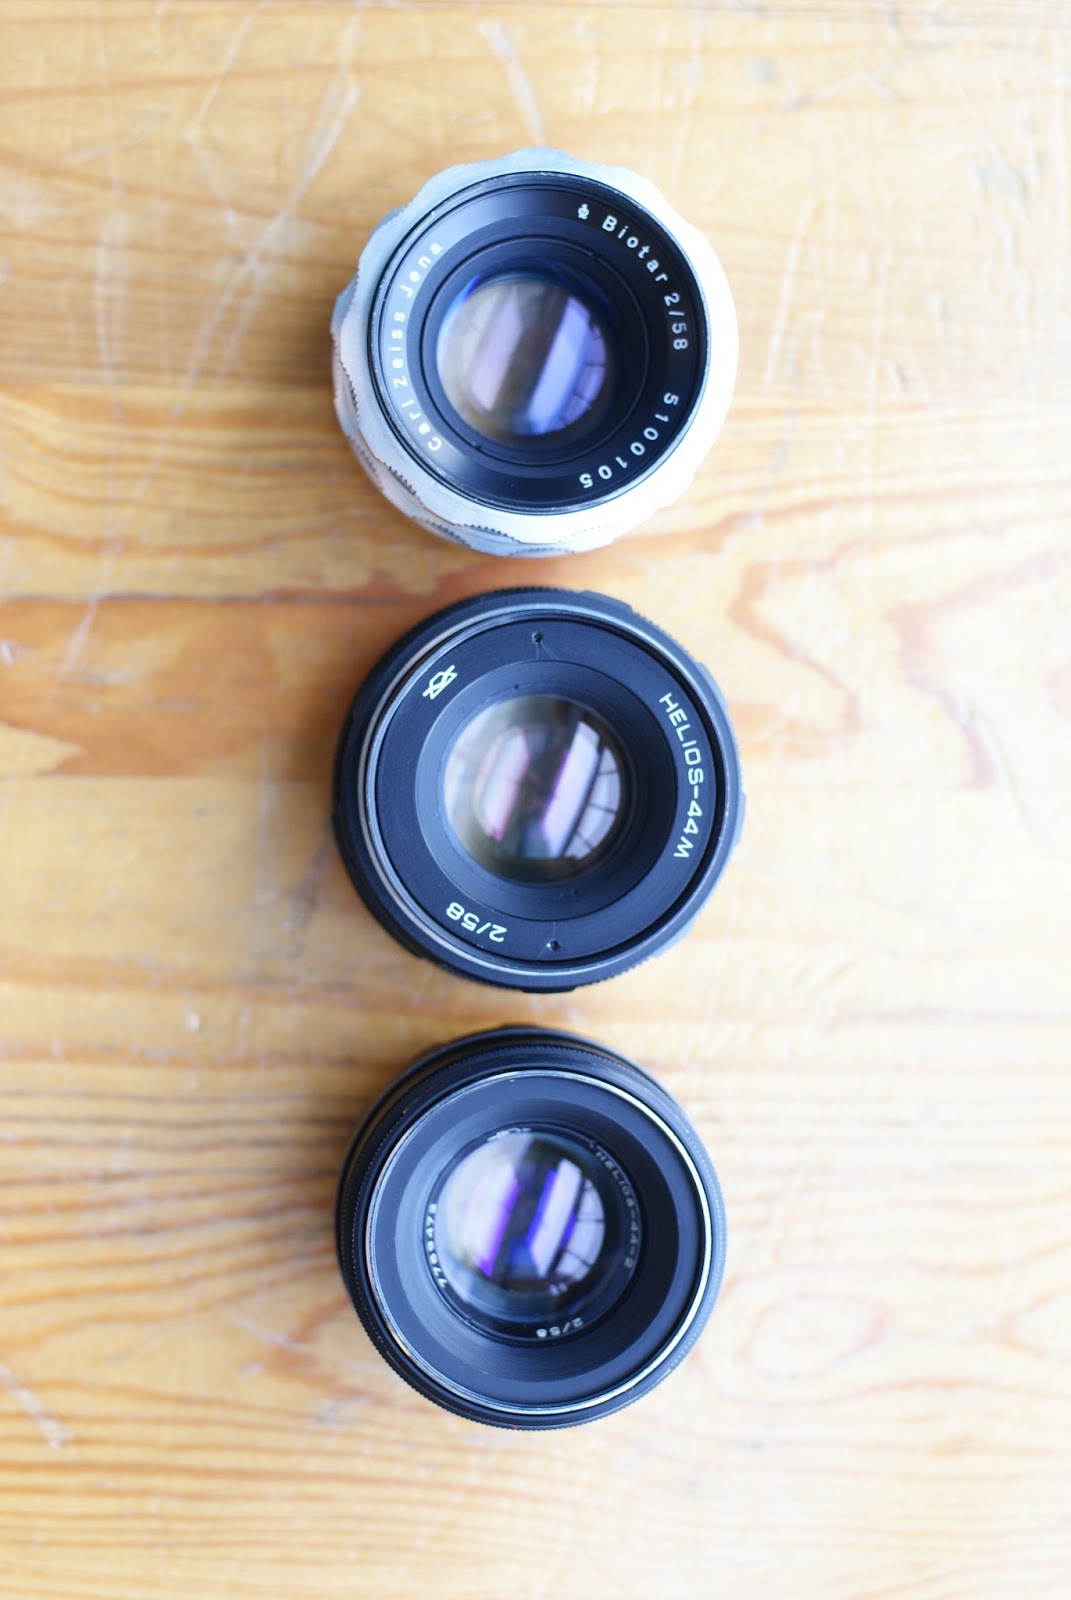 58mm Lens Comparison - Carl Zeiss Jena Biotar 58mm f/2 M42 vs Helios 44M 58mm f/2 M42 8 blades vs Helios 44-2 58mm F/2